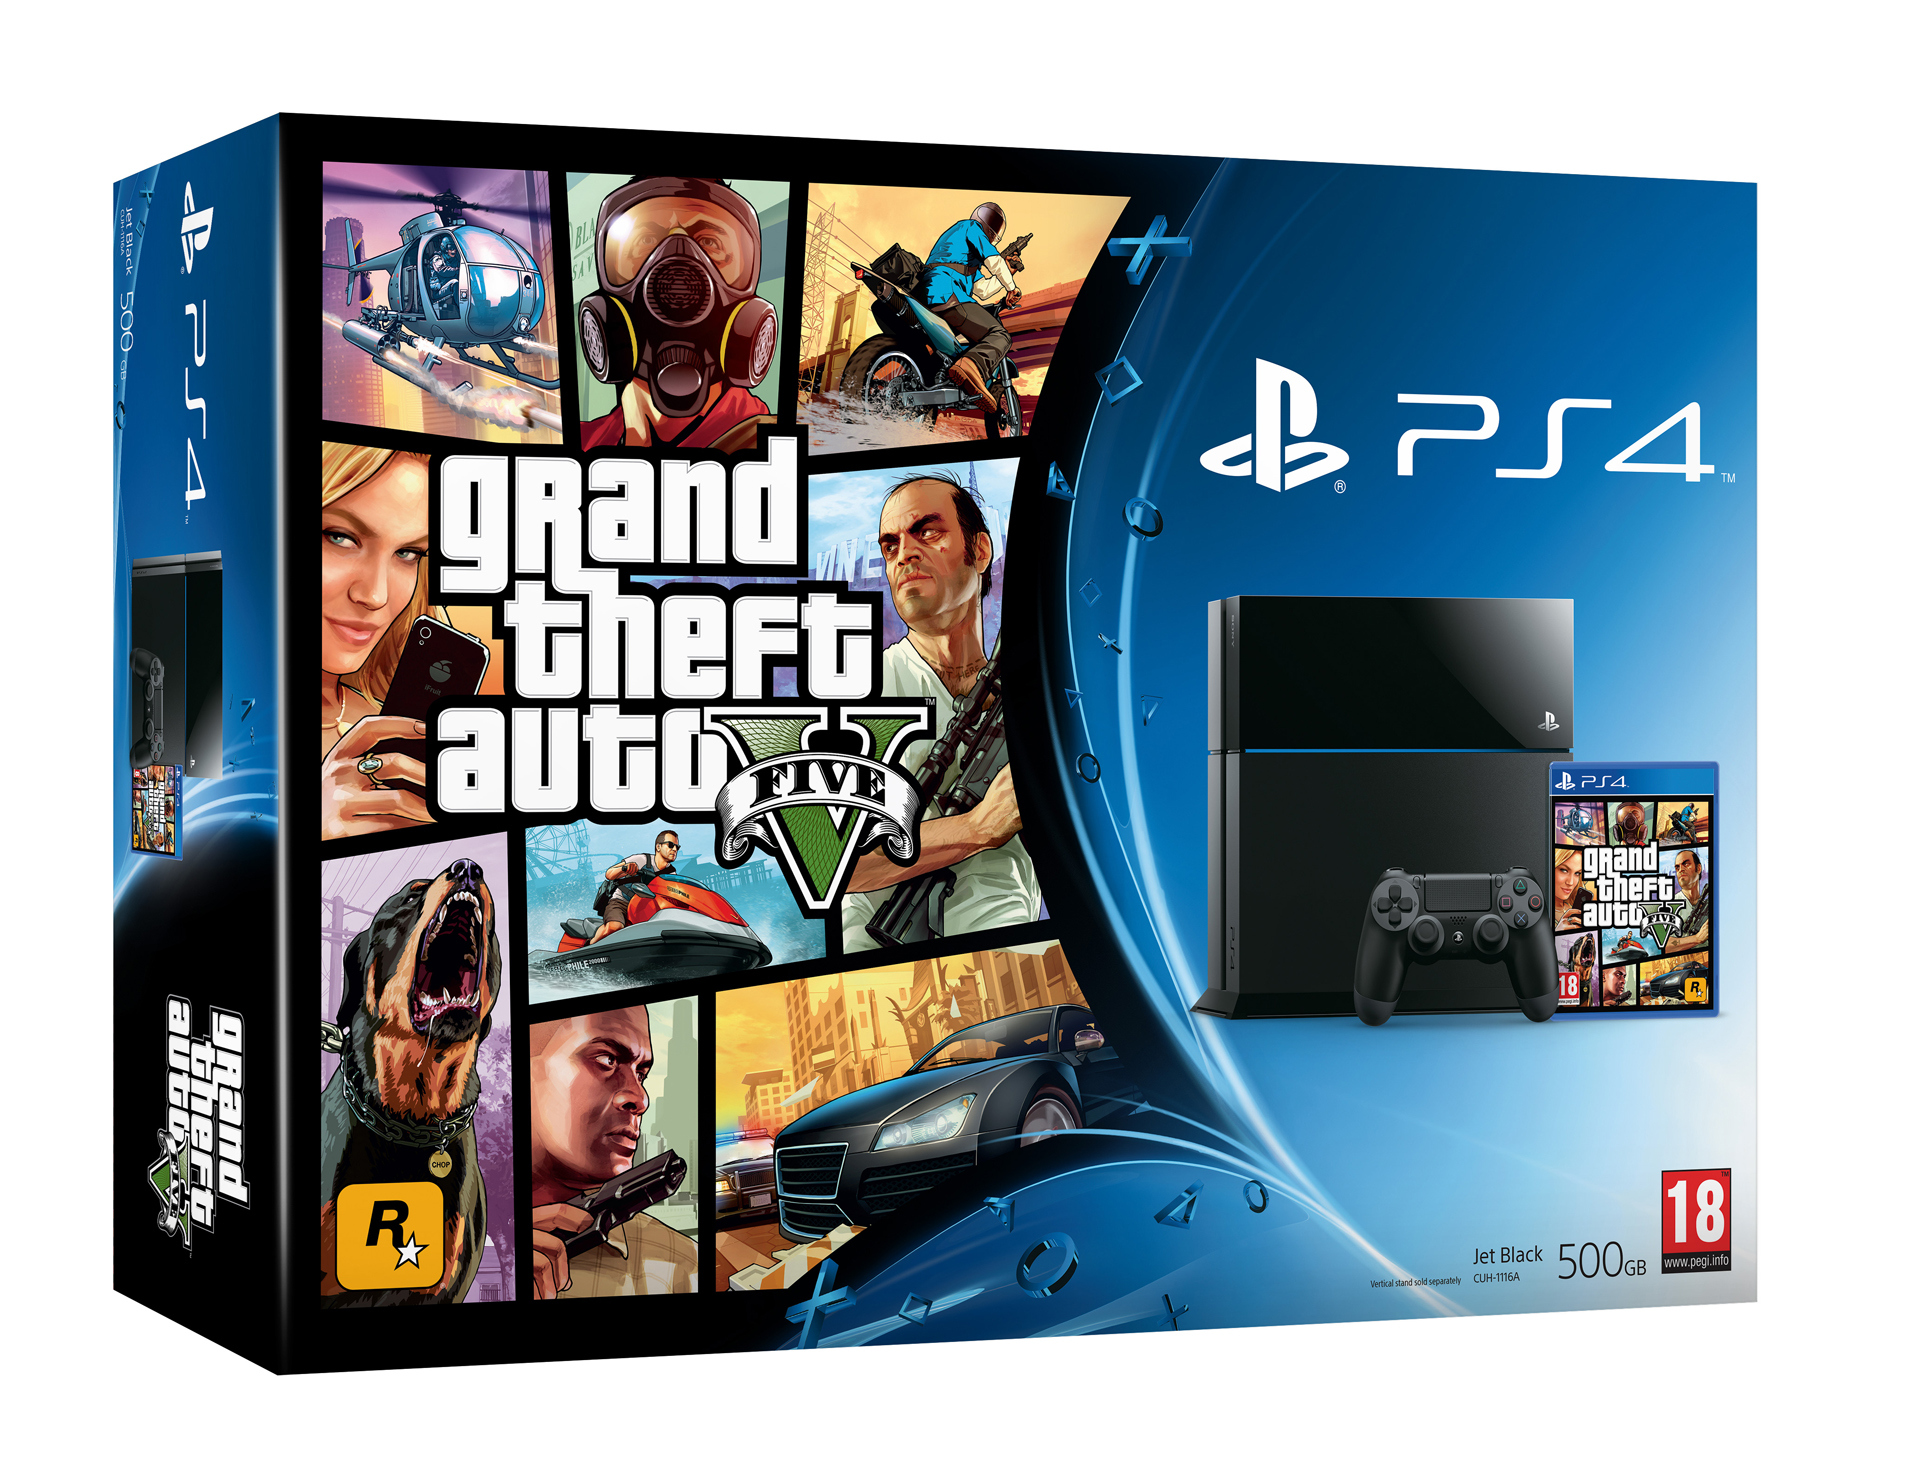 PS 4 500 GB Grand Theft Auto V Bundle Jet Black